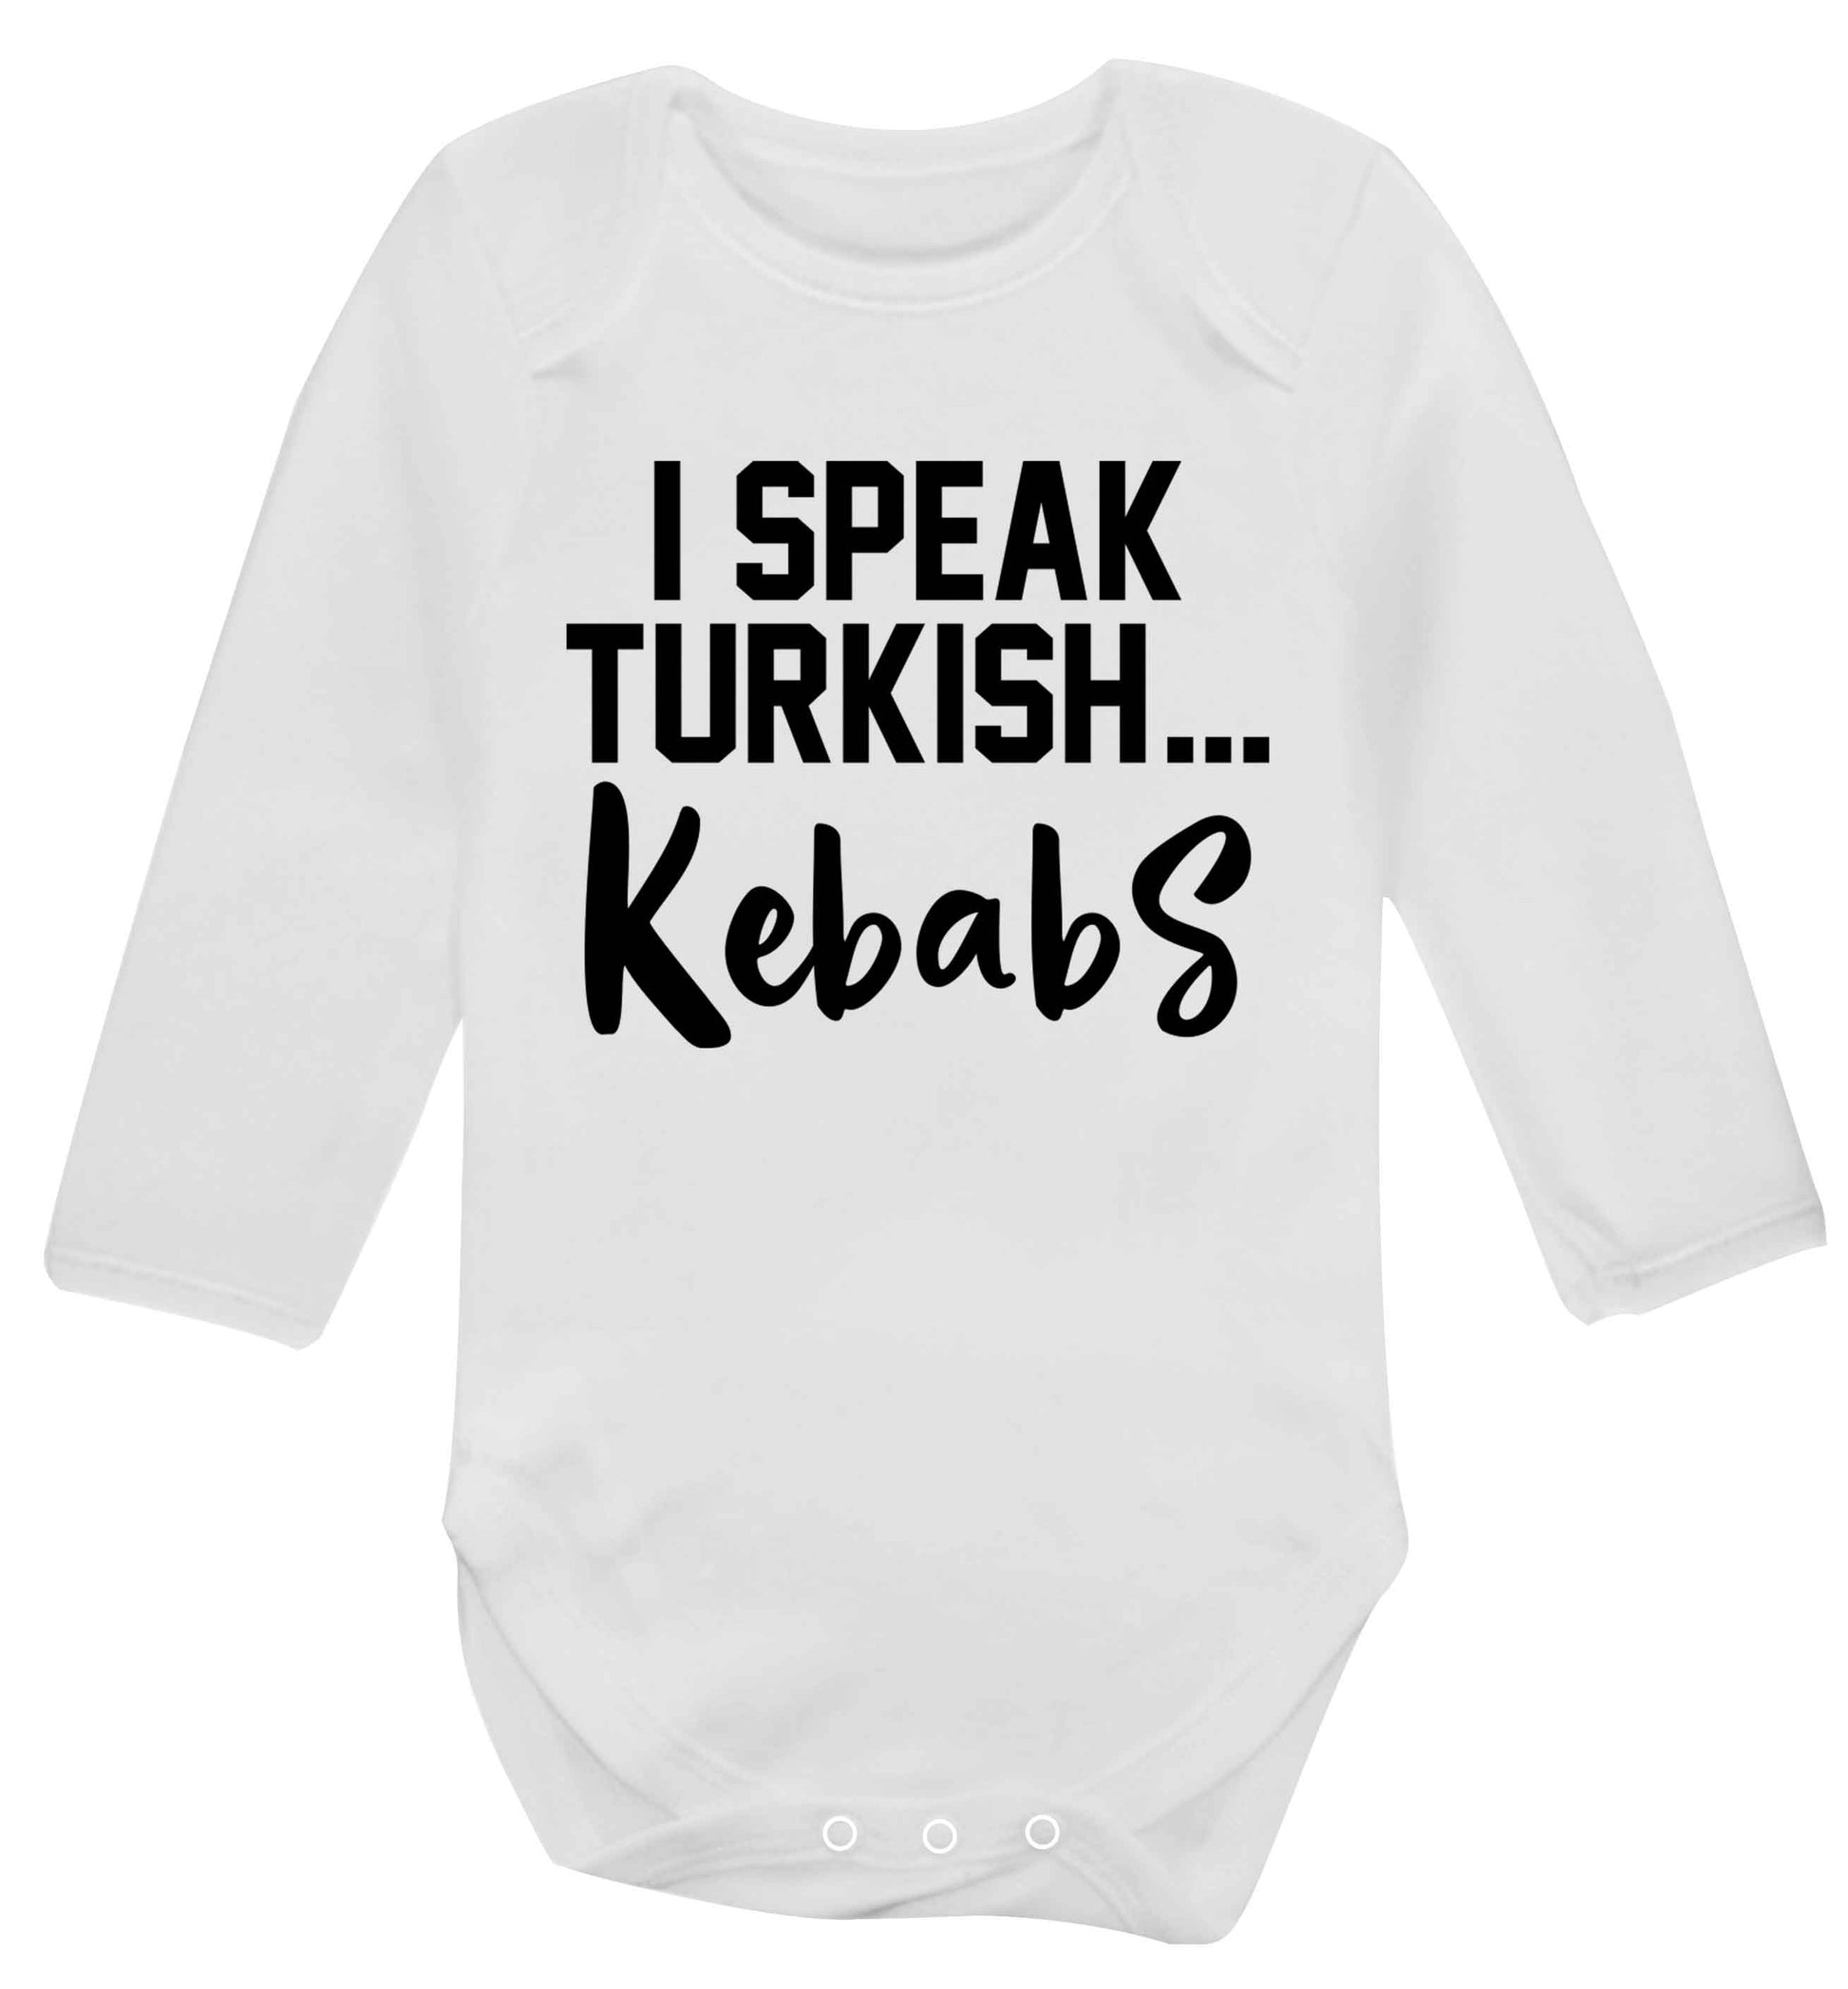 I speak Turkish...kebabs Baby Vest long sleeved white 6-12 months